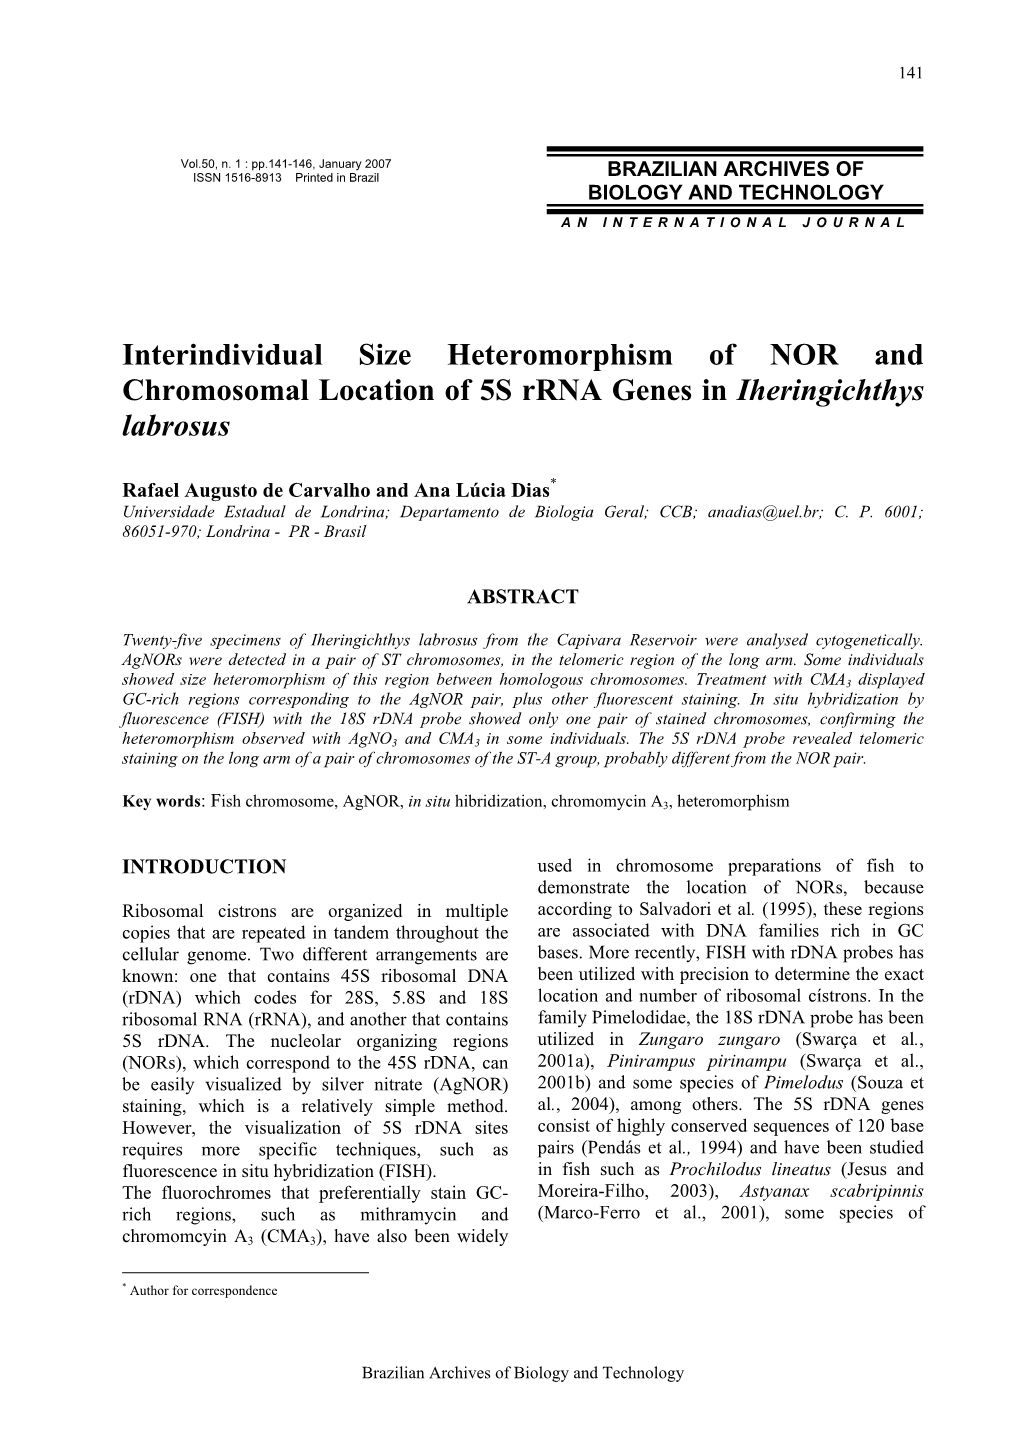 Interindividual Size Heteromorphism of NOR and Chromosomal Location of 5S Rrna Genes in Iheringichthys Labrosus